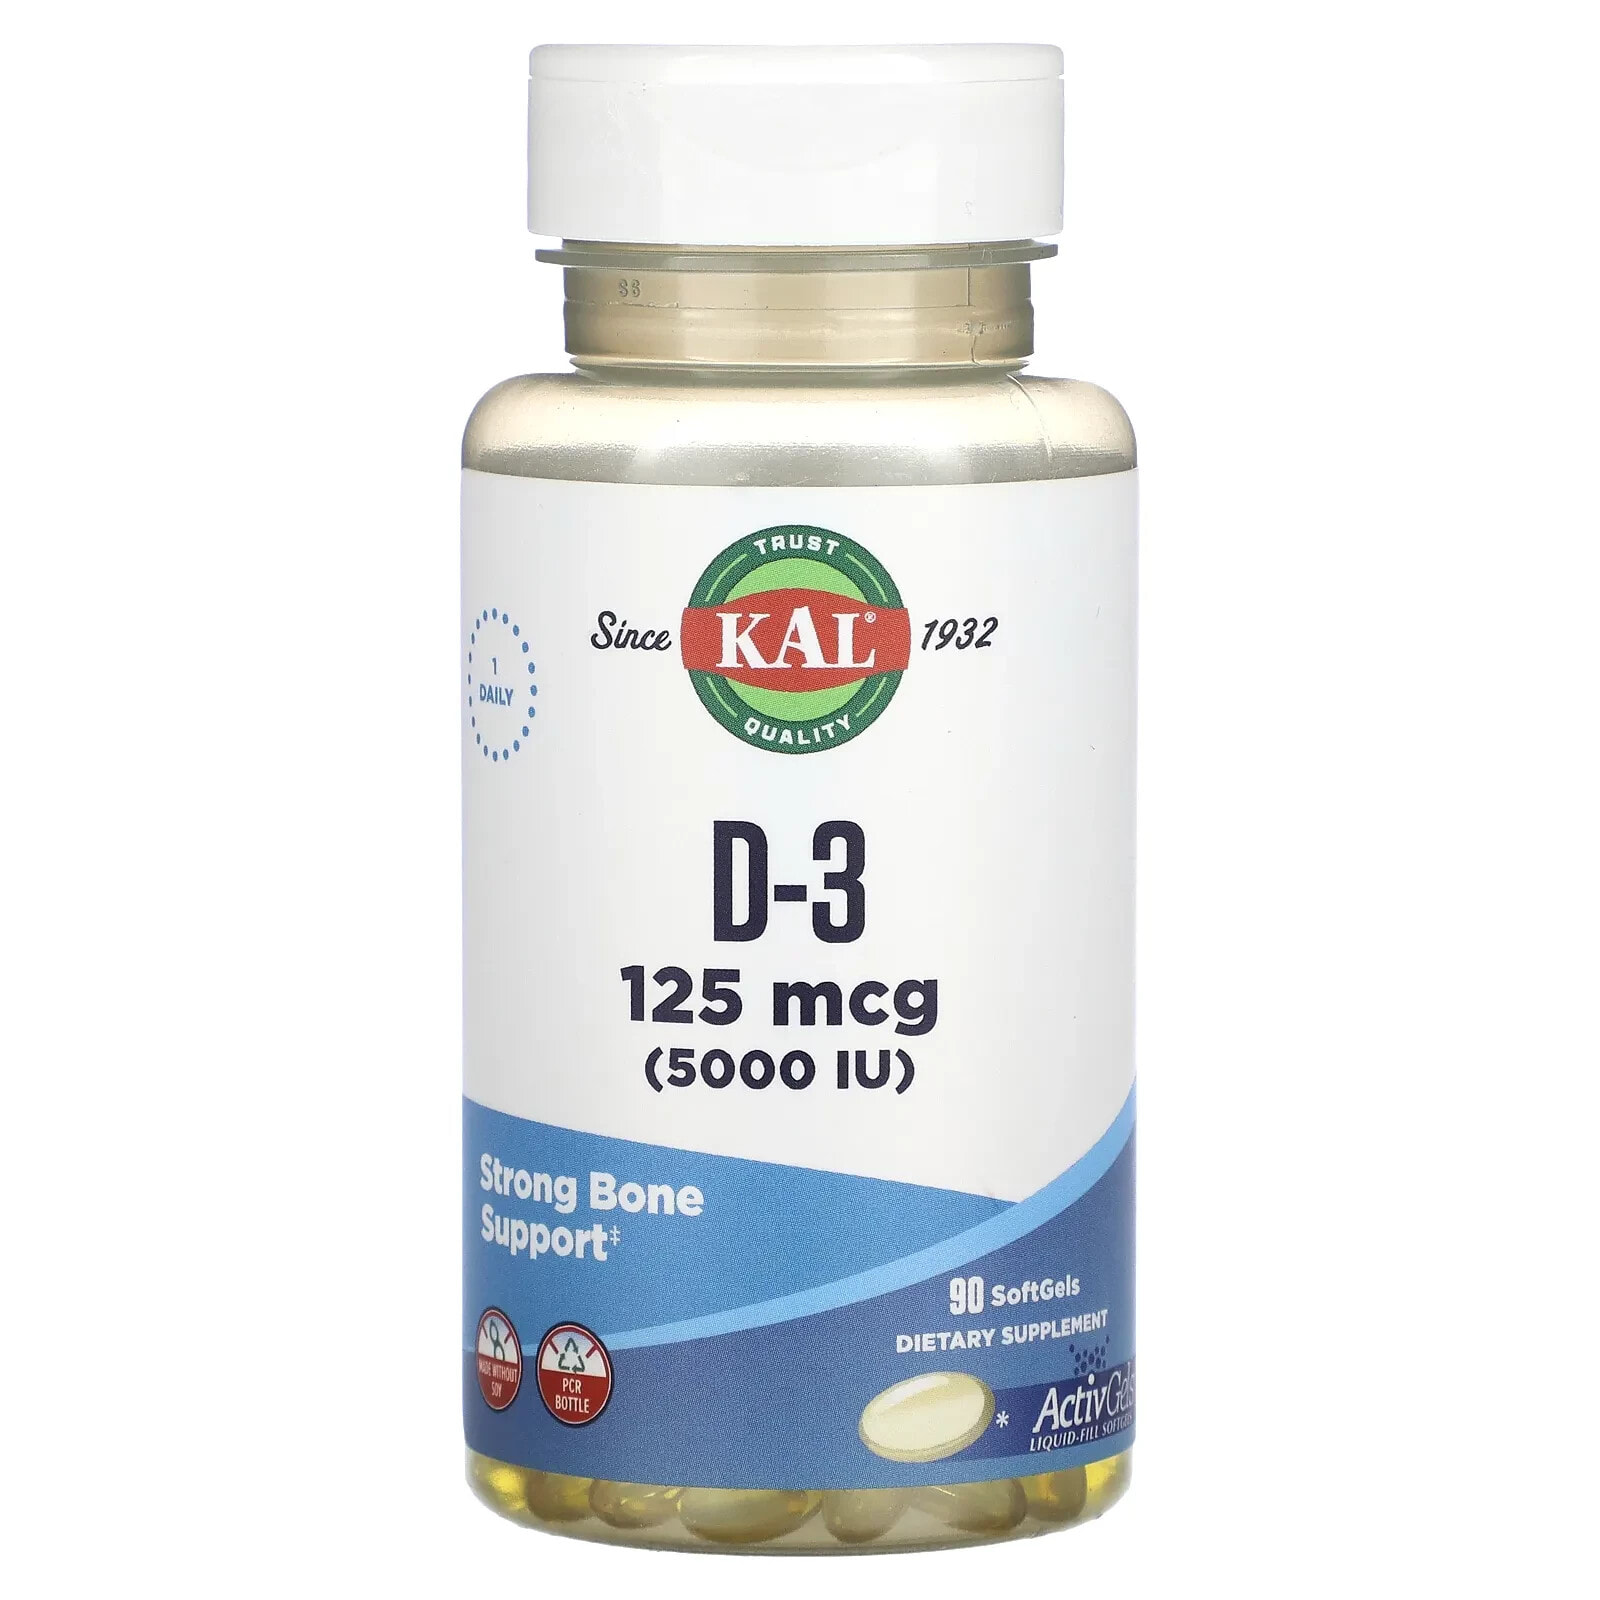 KAL, D-3, 25 мкг (1000 МЕ), 100 мягких таблеток